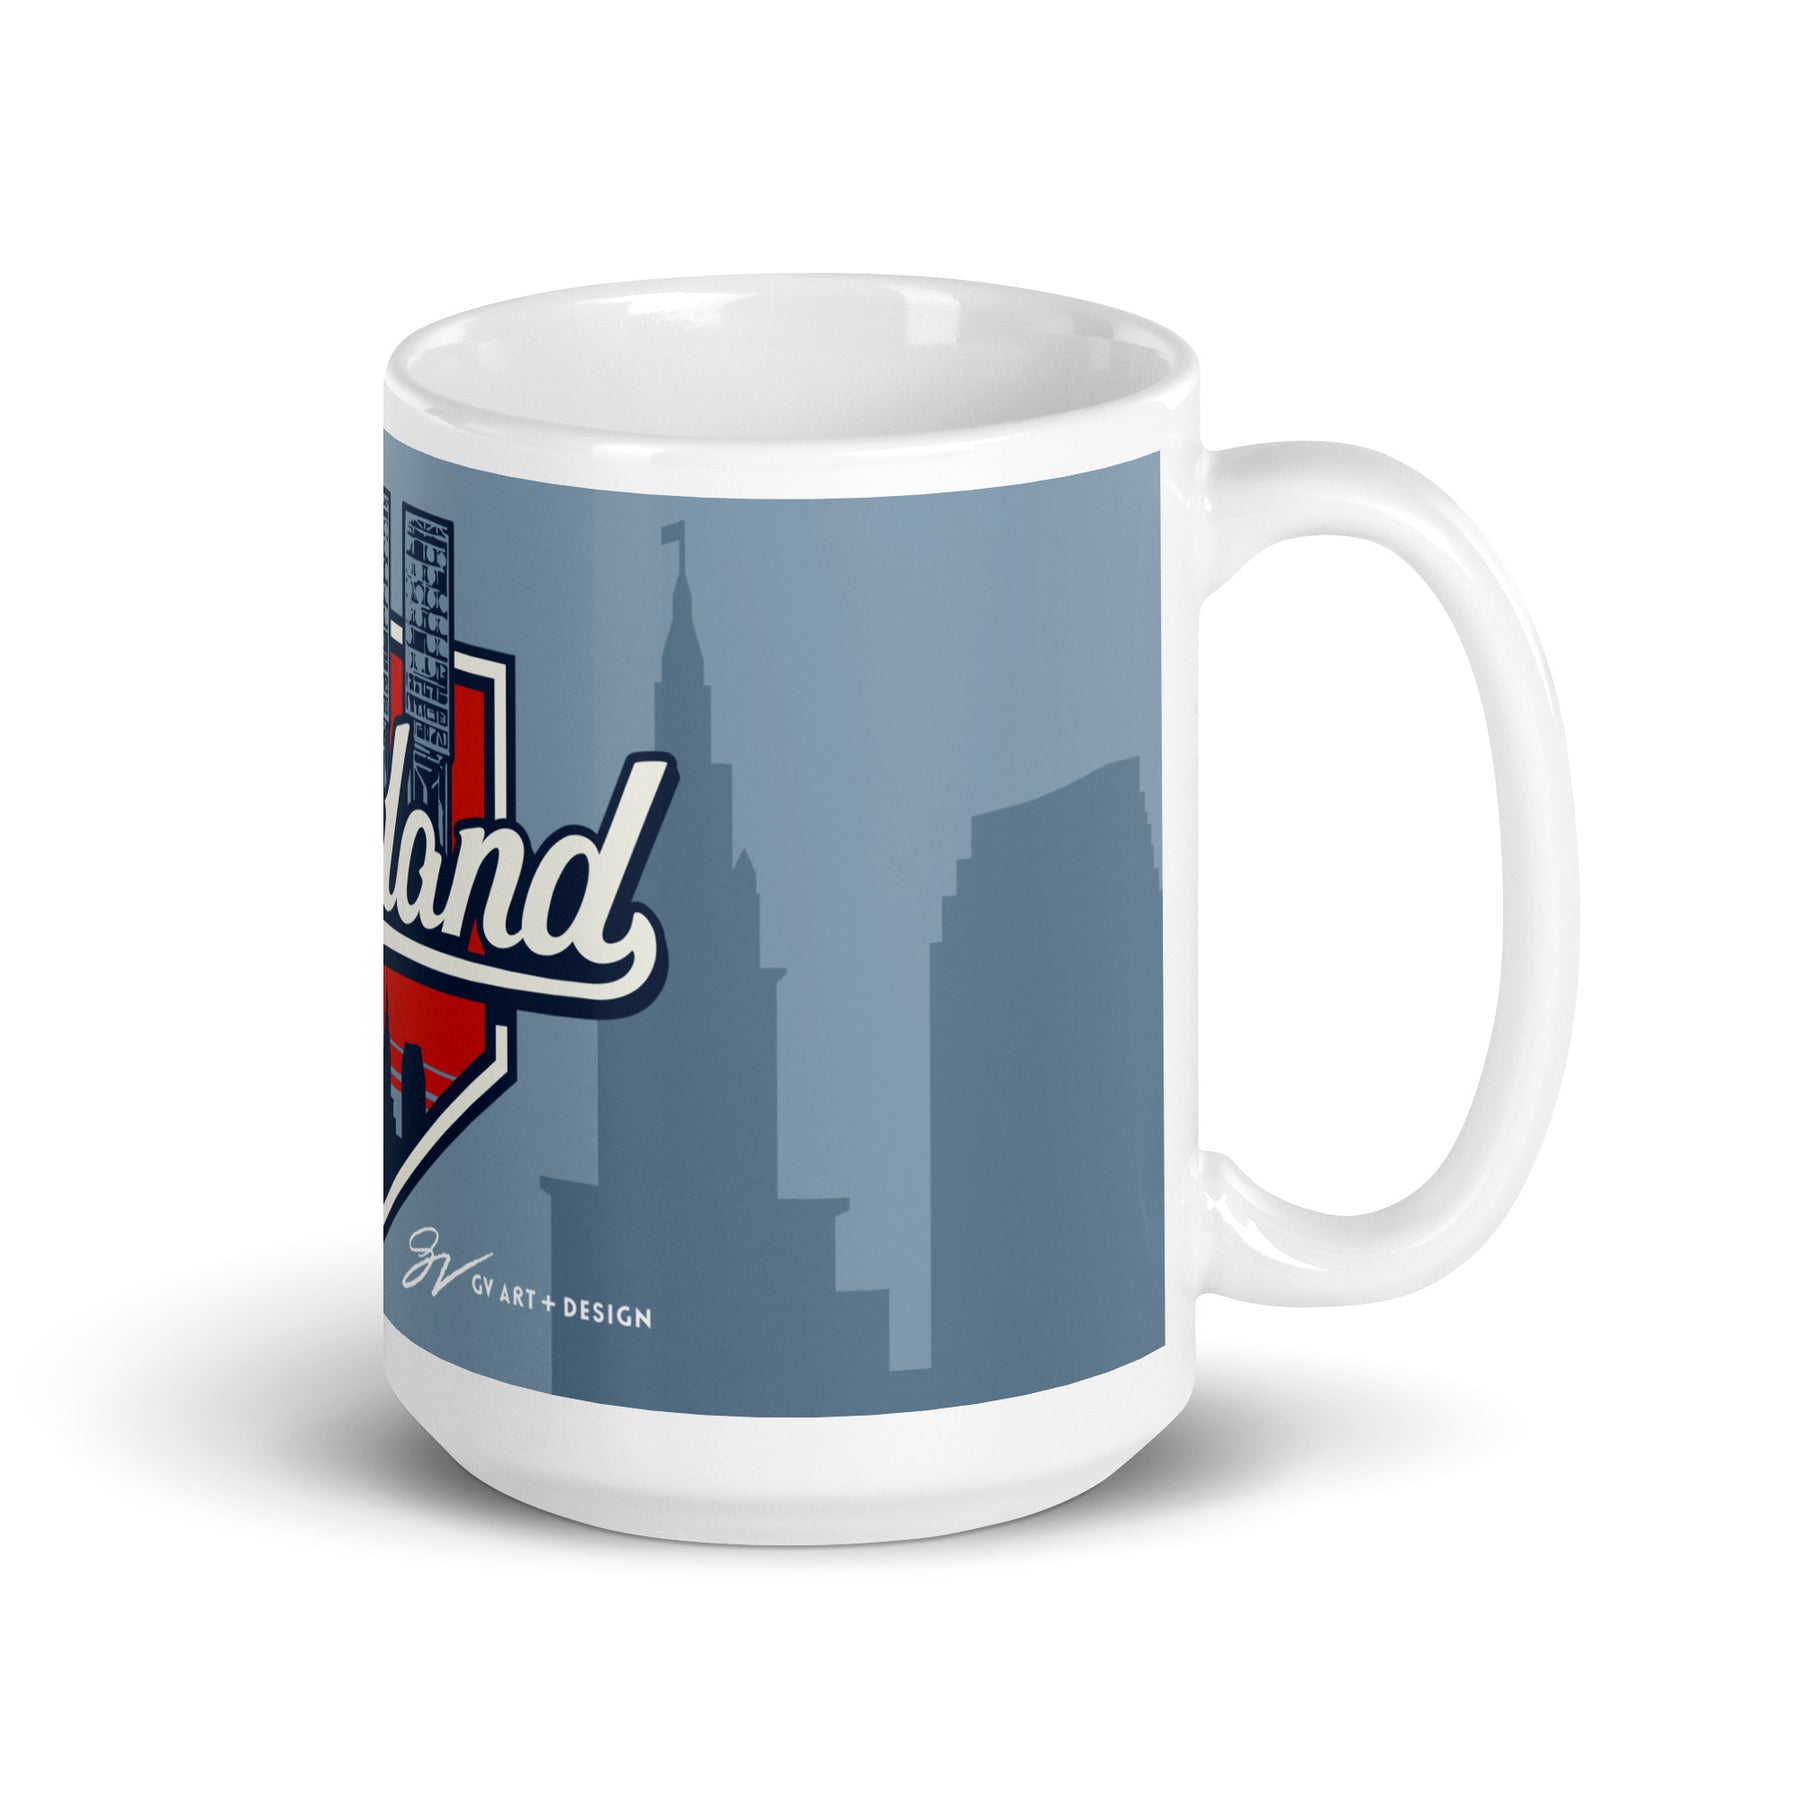 Cleveland Baseball Lights Mug